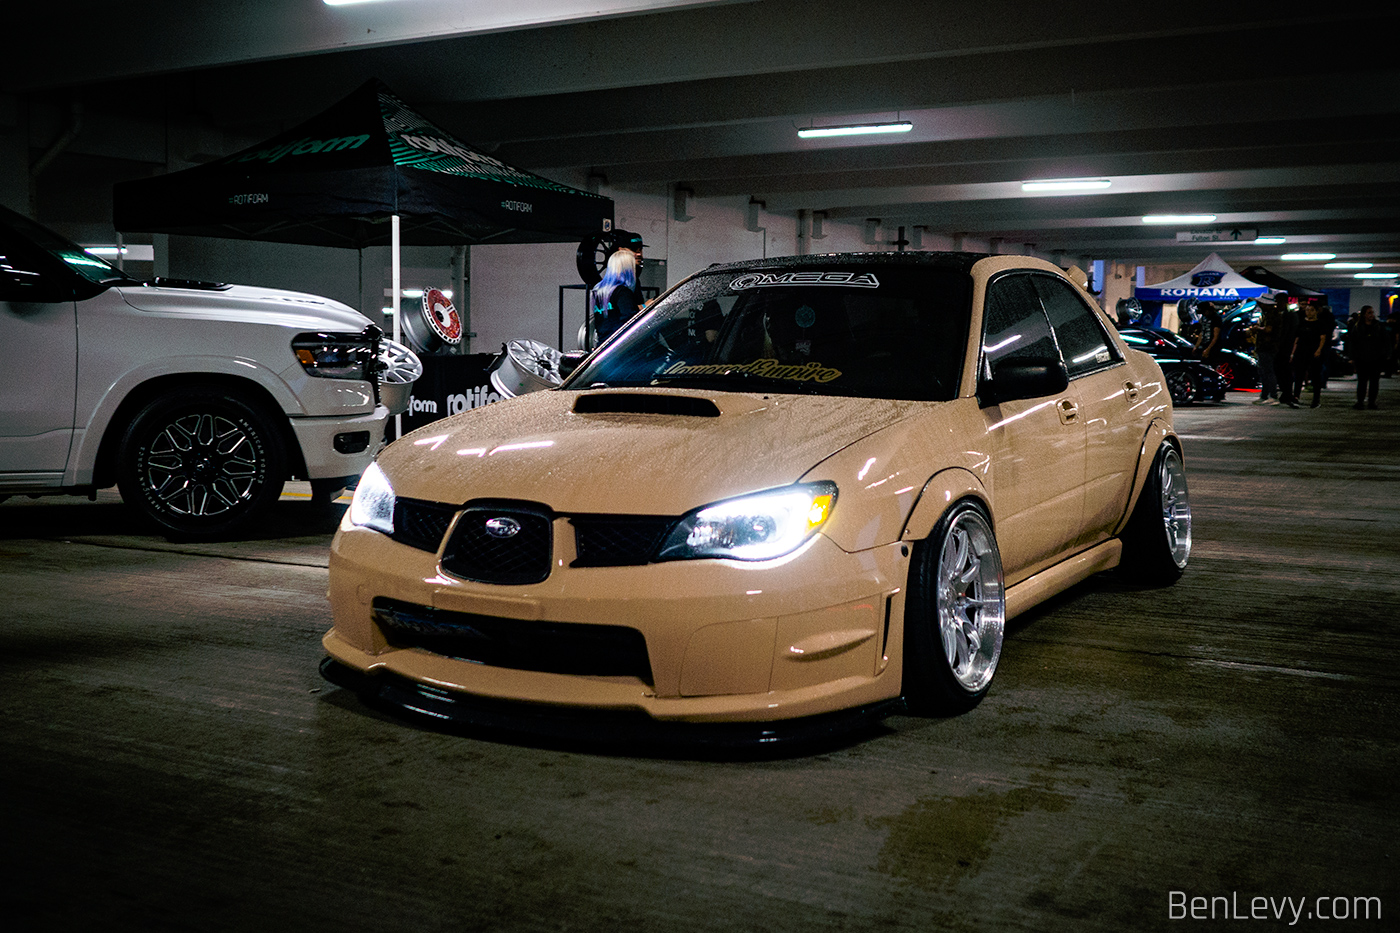 Tan Subaru WRX in Parking Garage